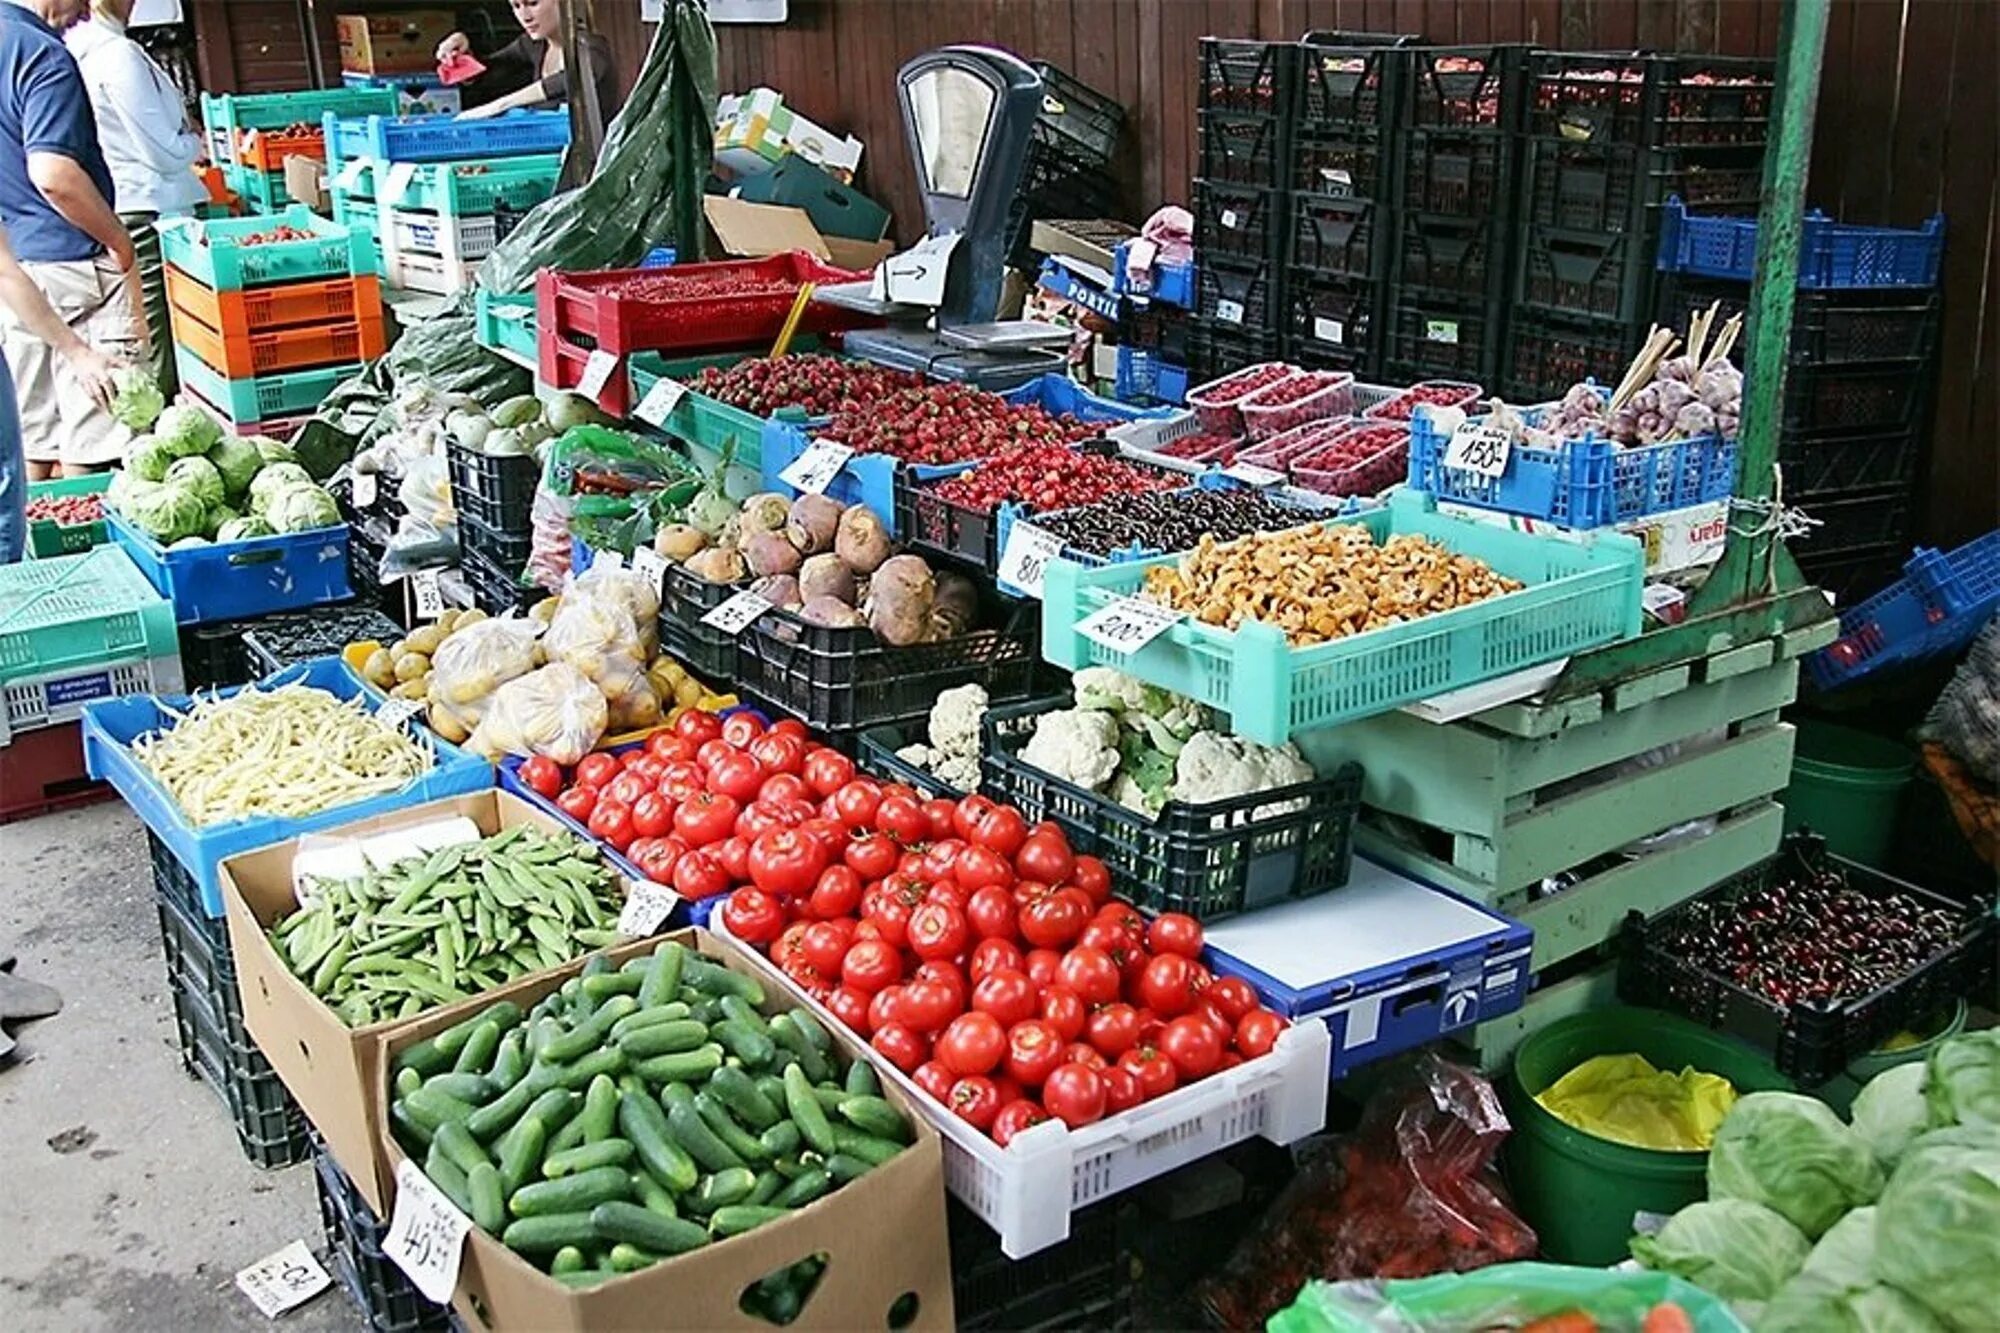 Овощи рынок продаж. Овощи на рынке. Прилавок на рынке. Овощной прилавок на рынке. Торговля овощами на рынке.